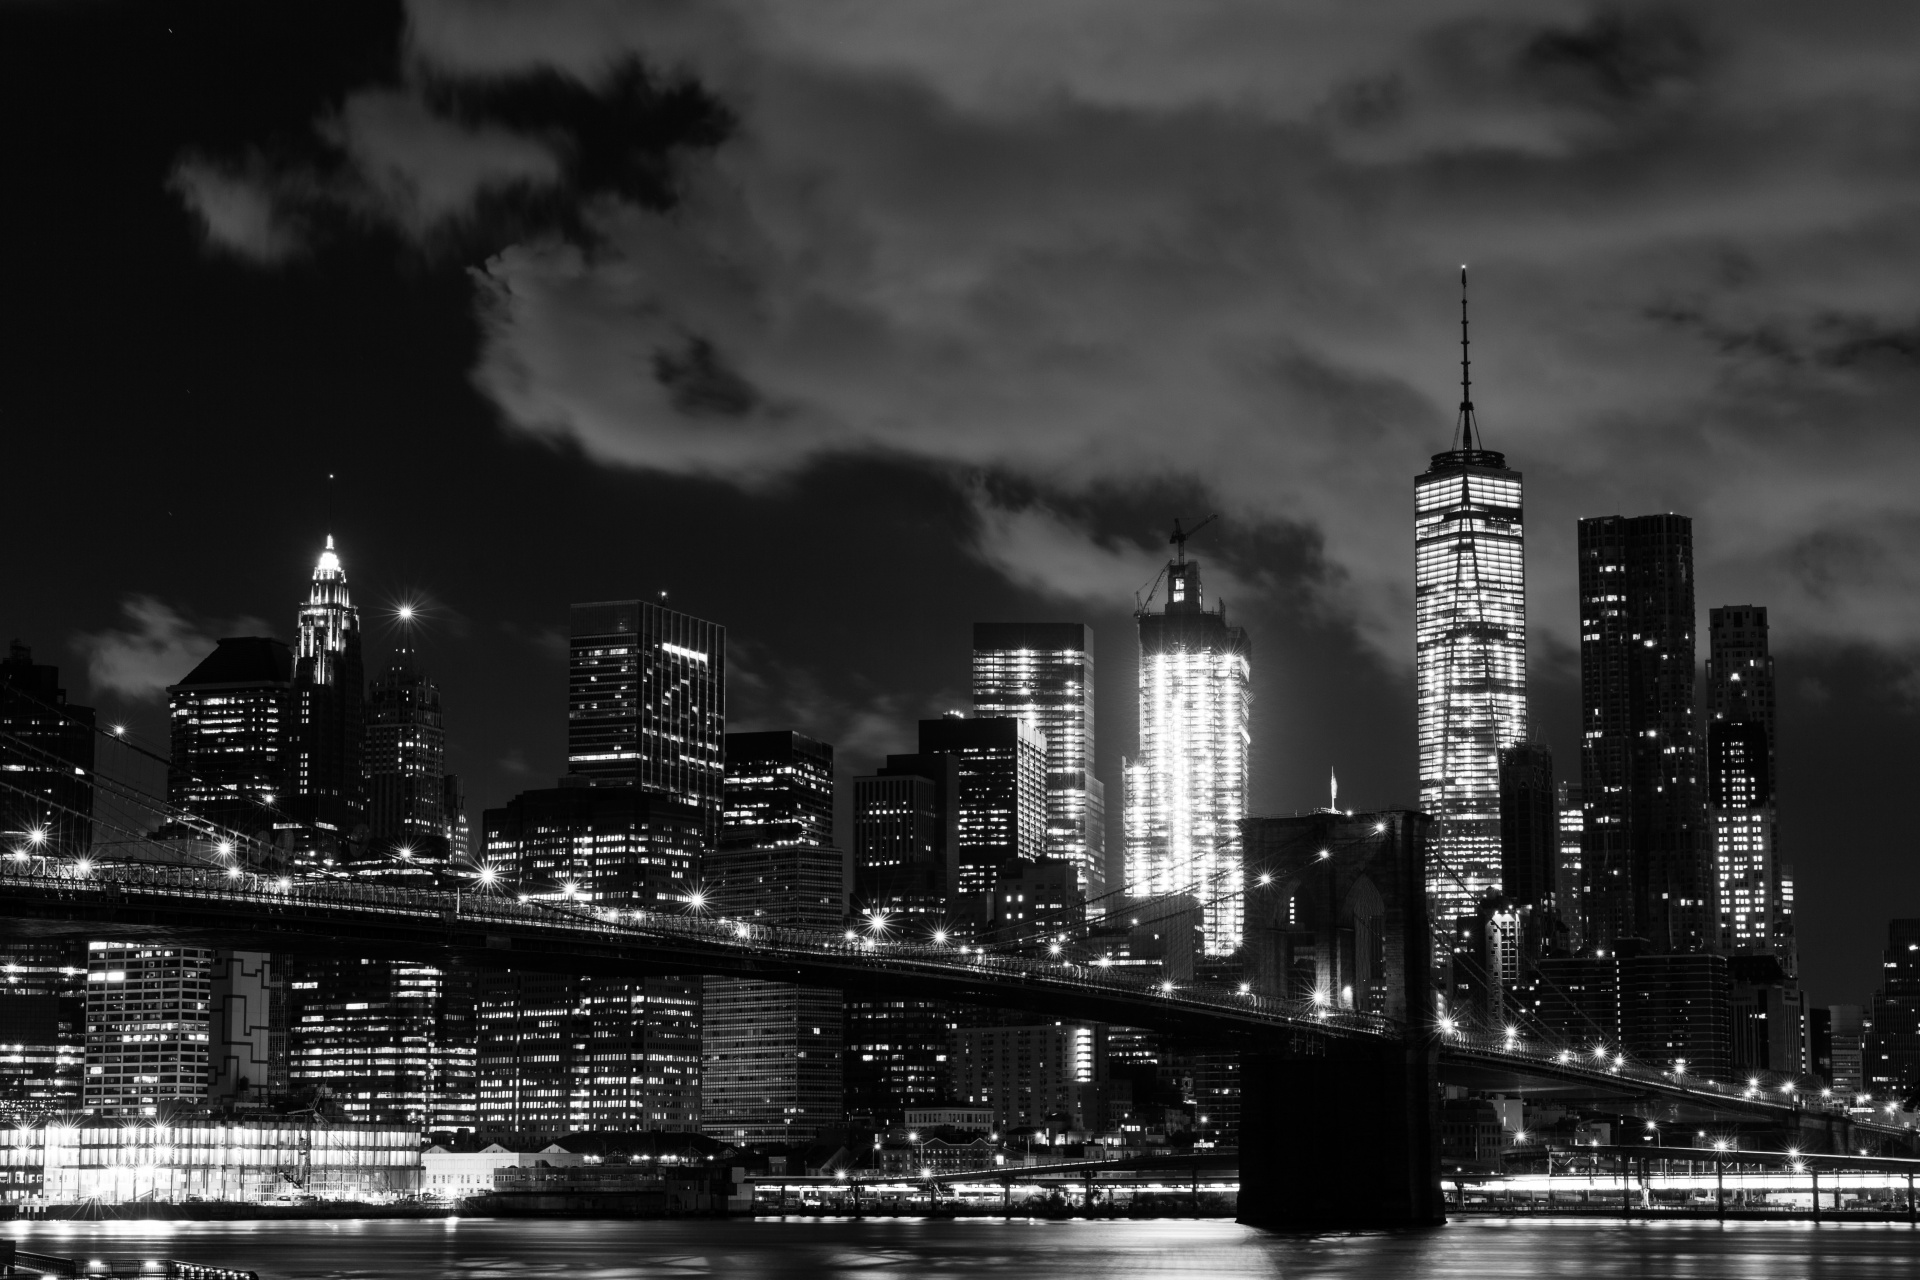 Nowy Jork nocy panoramę